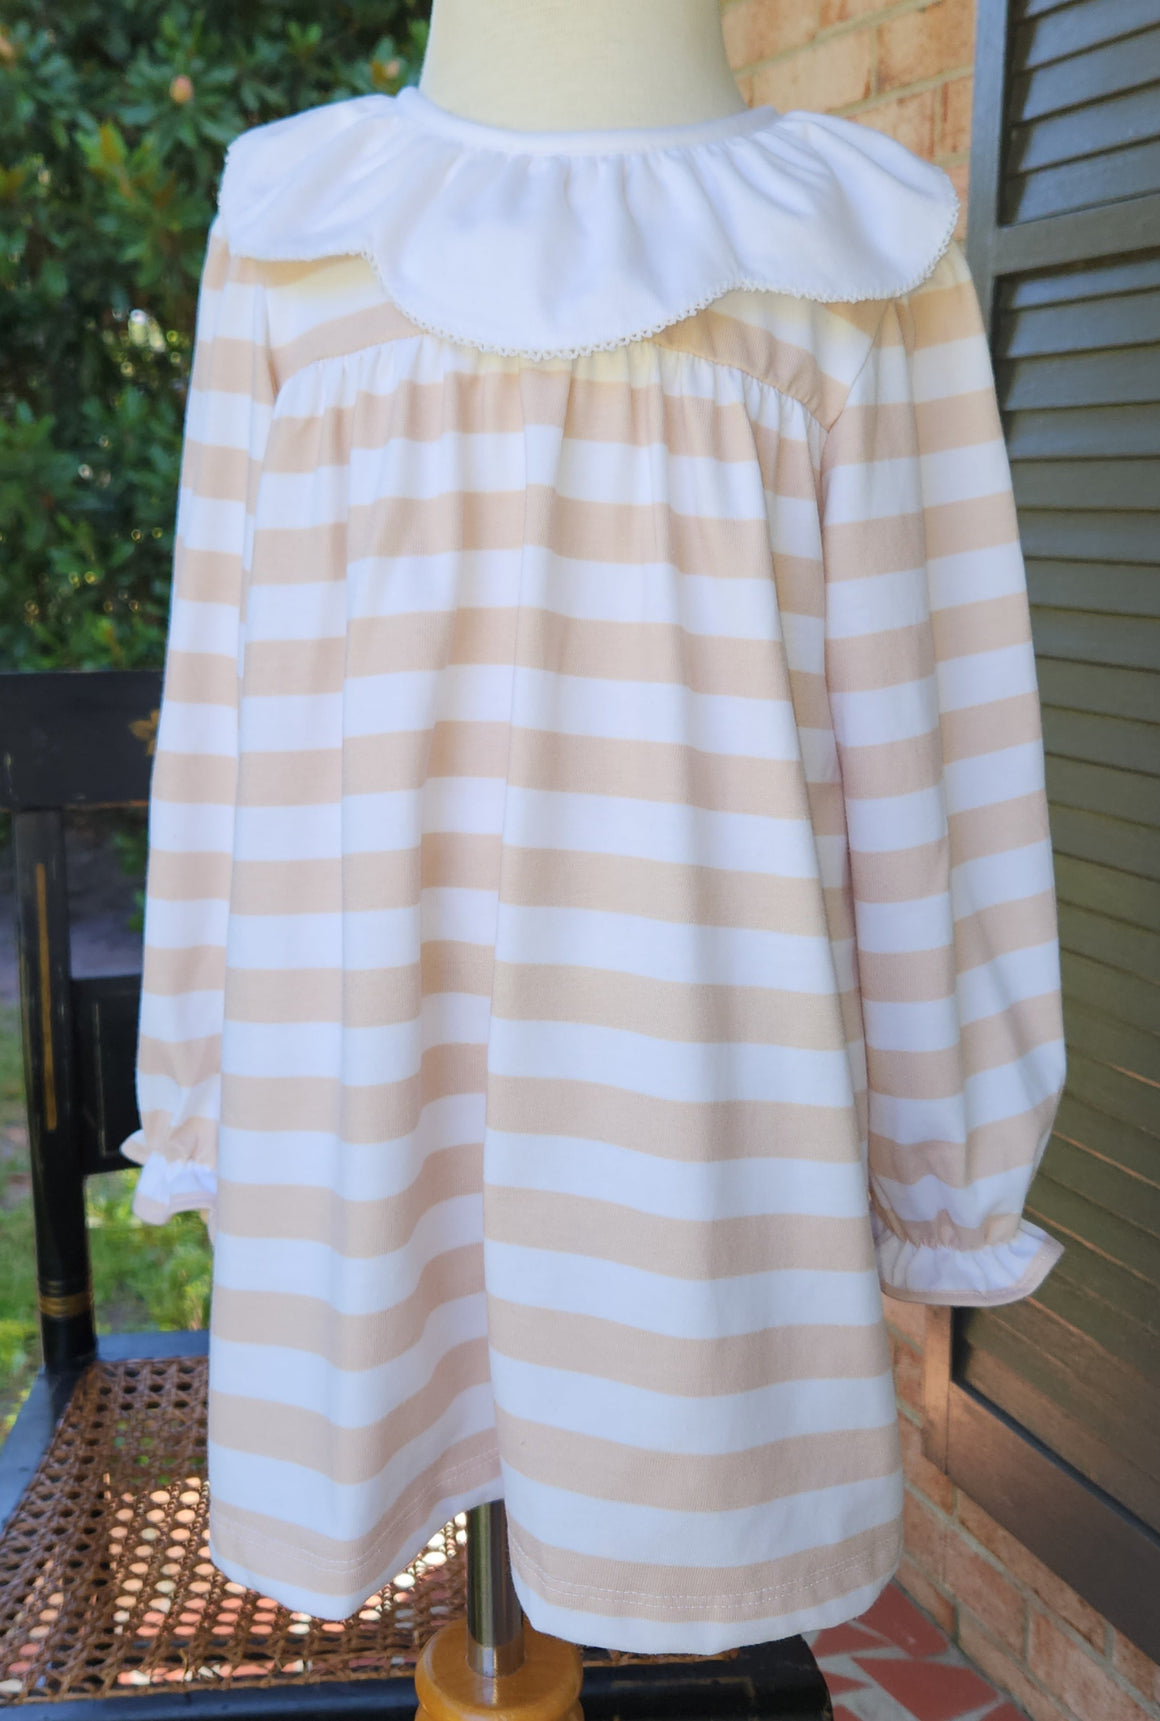 Tan Stripe Knit Float Dress (Dress & Dress w/ Matching Bloomer)